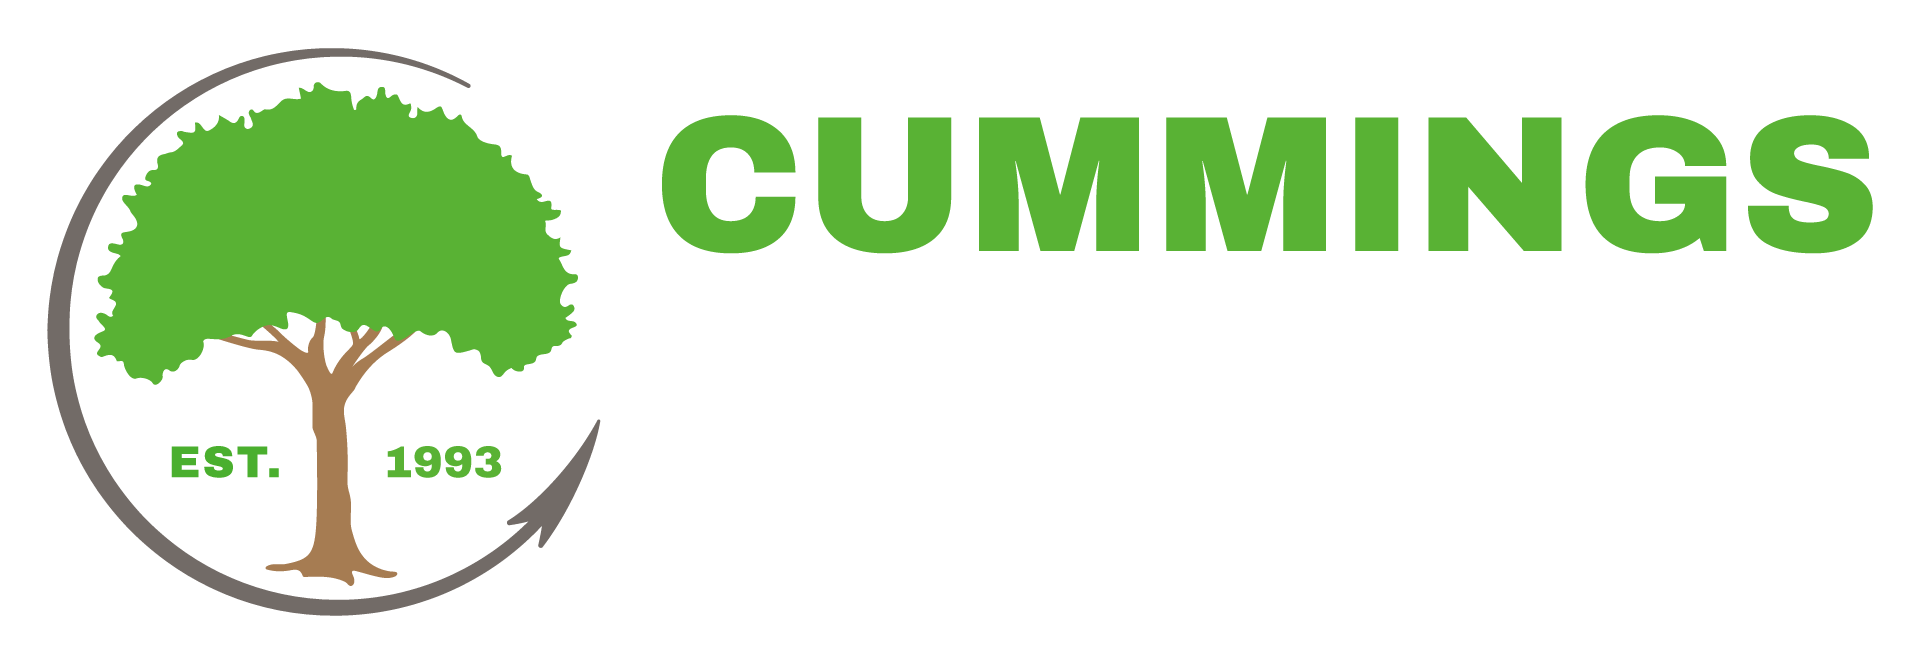 Tree service eugene